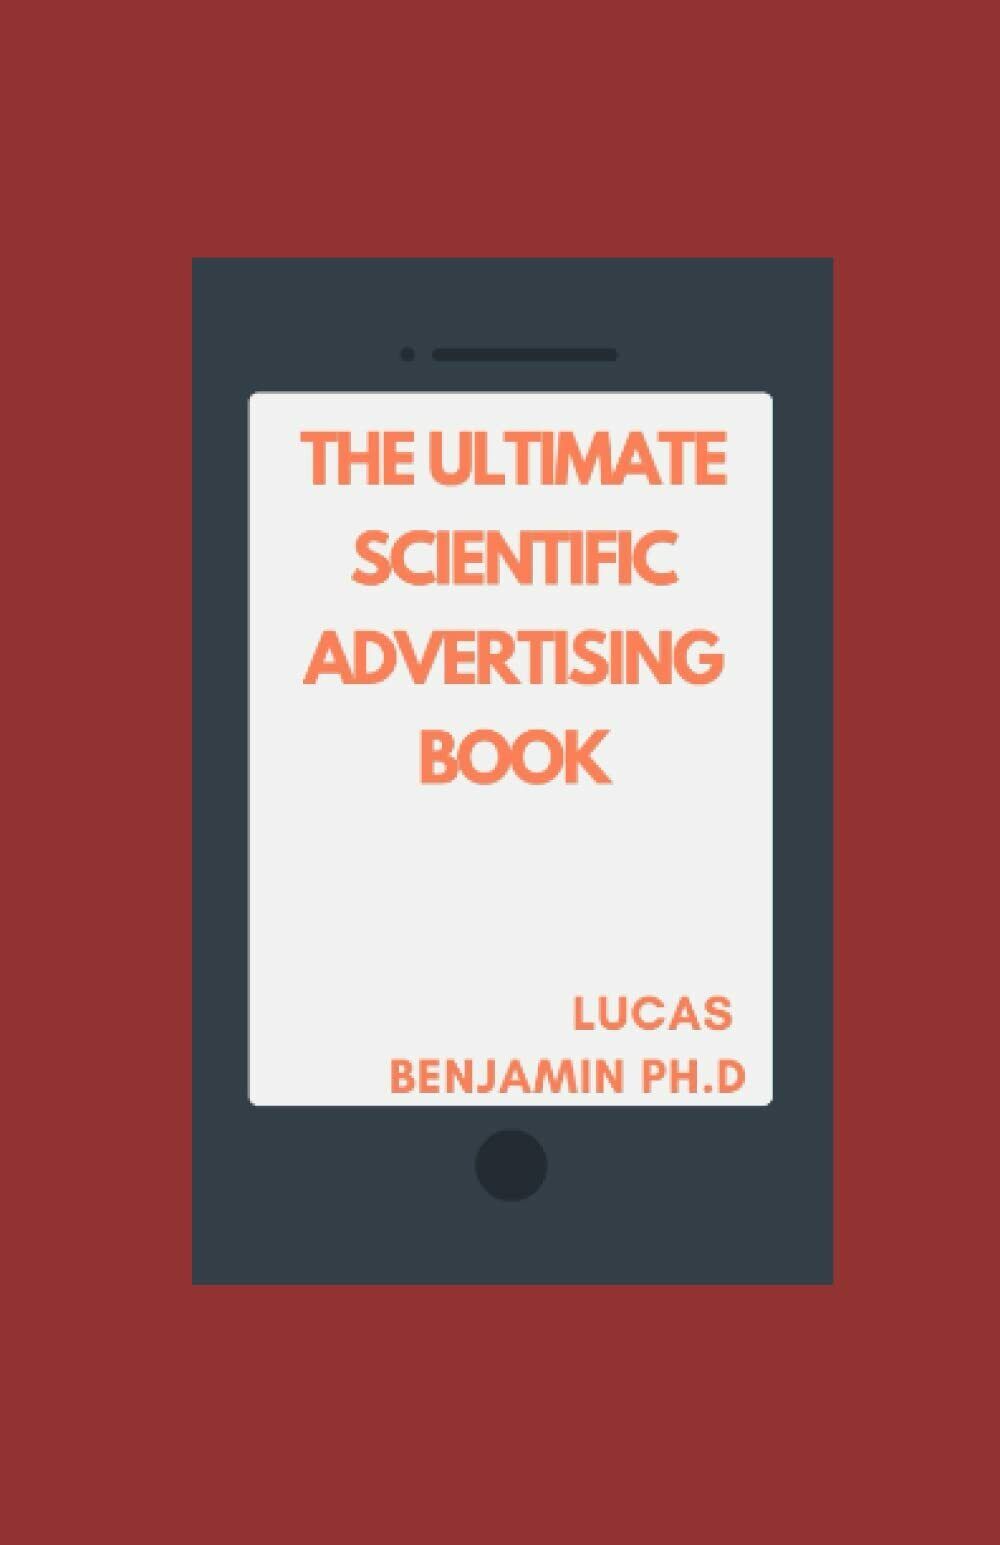 The Ultimate Scientific Advertising Book: Timeless Principles For Persuasive Ad  libro usato